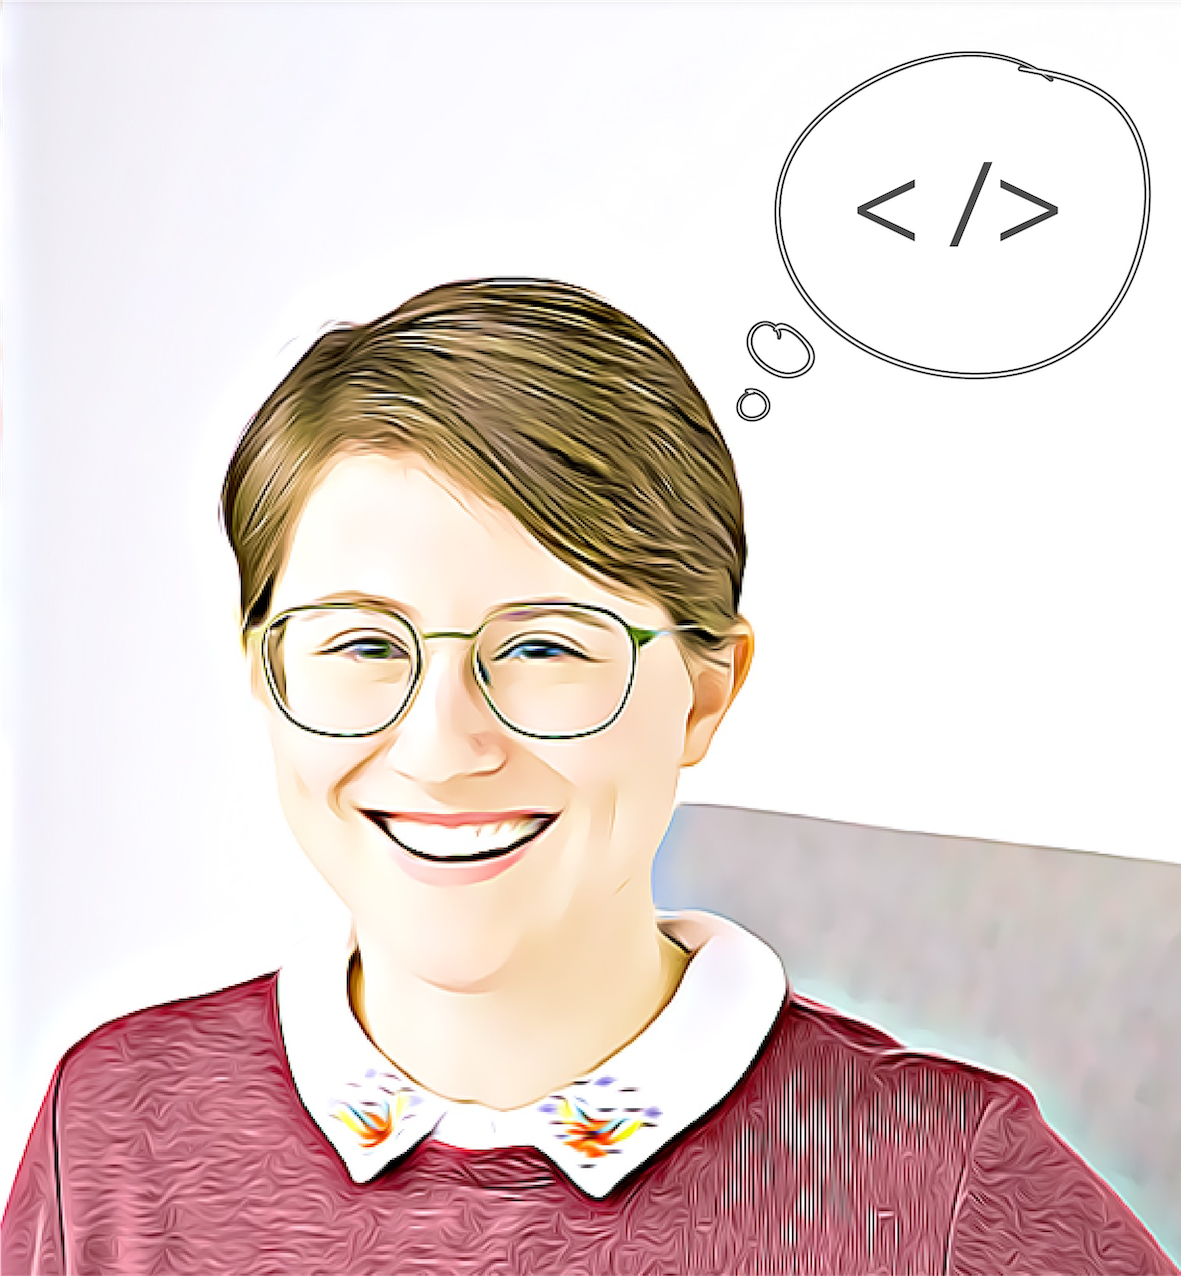 Alanna Churchard profile photo in a cartoon illustration.